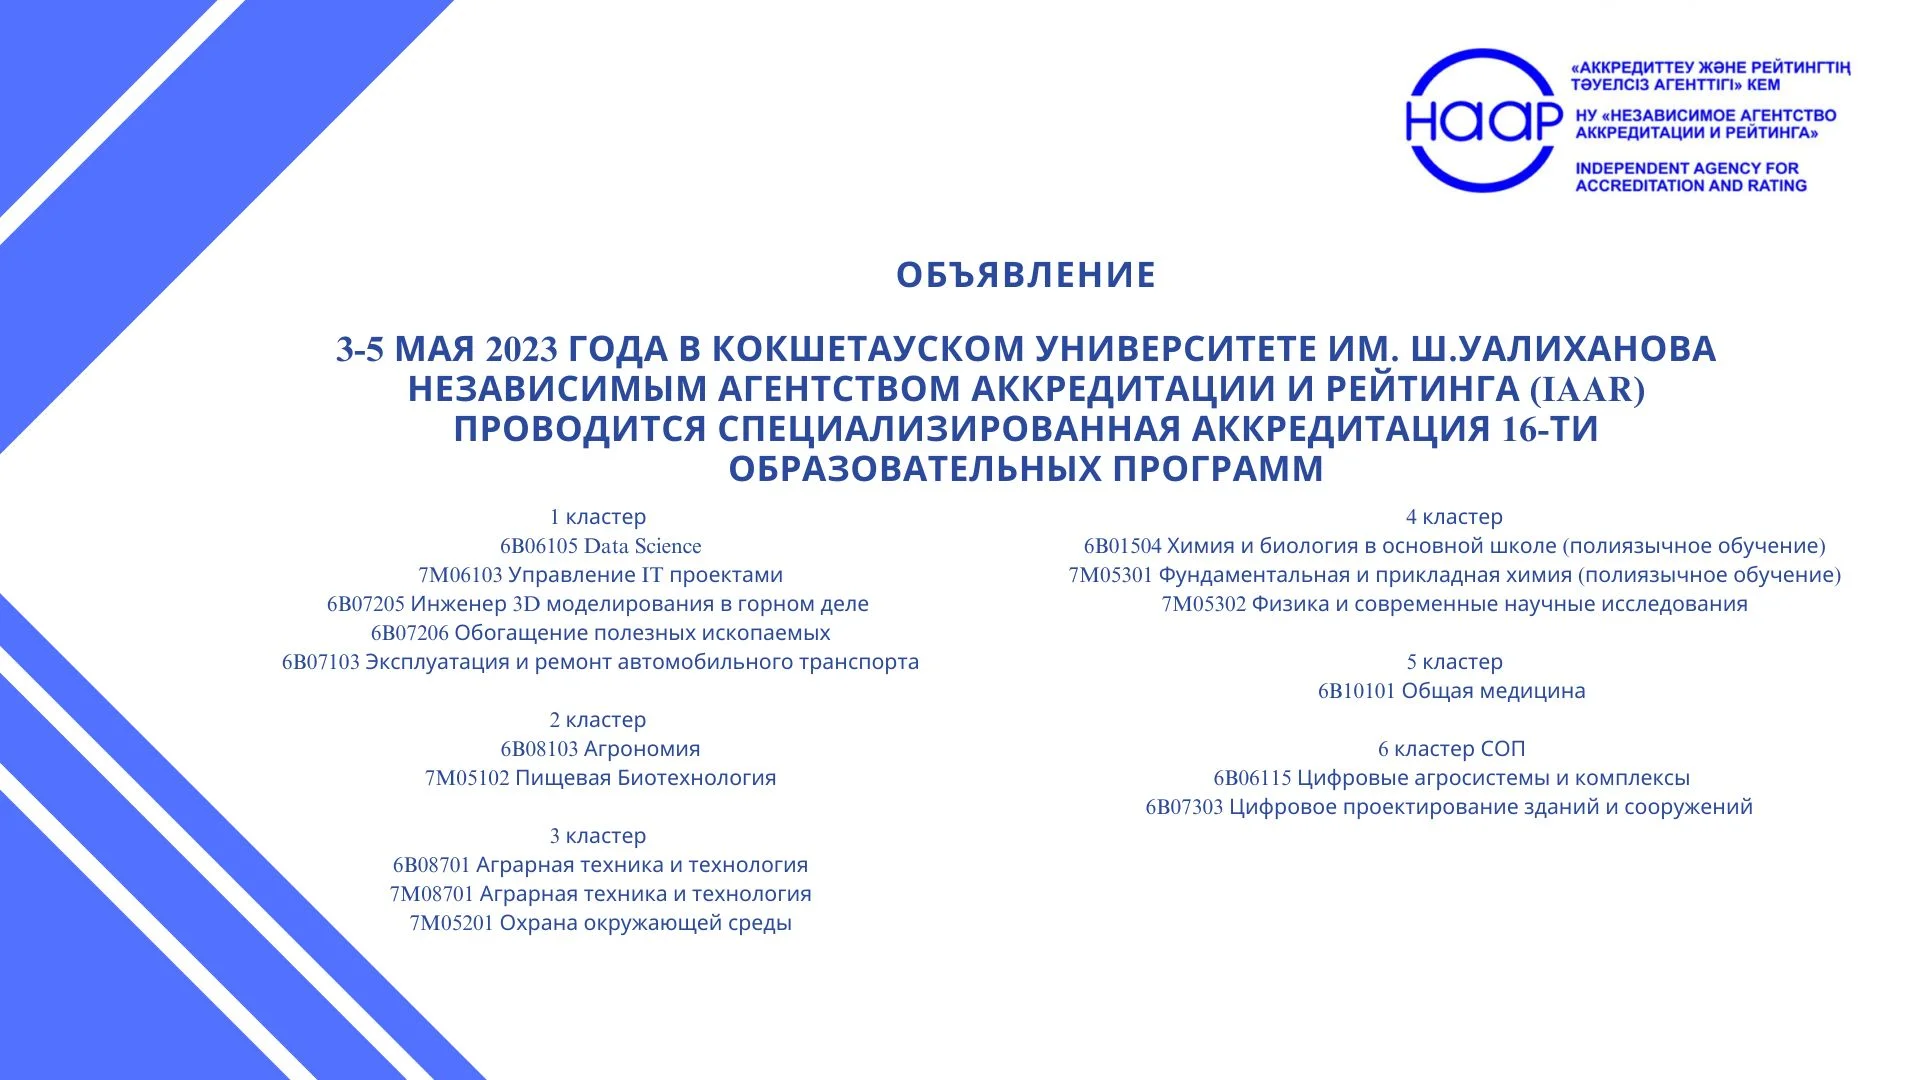 May 3-5, 2023 at Kokshetau University named after Sh. Ualikhanov Accreditation and Rating Agency (IAAR) conducted specialized accreditation of 16 educational programs: